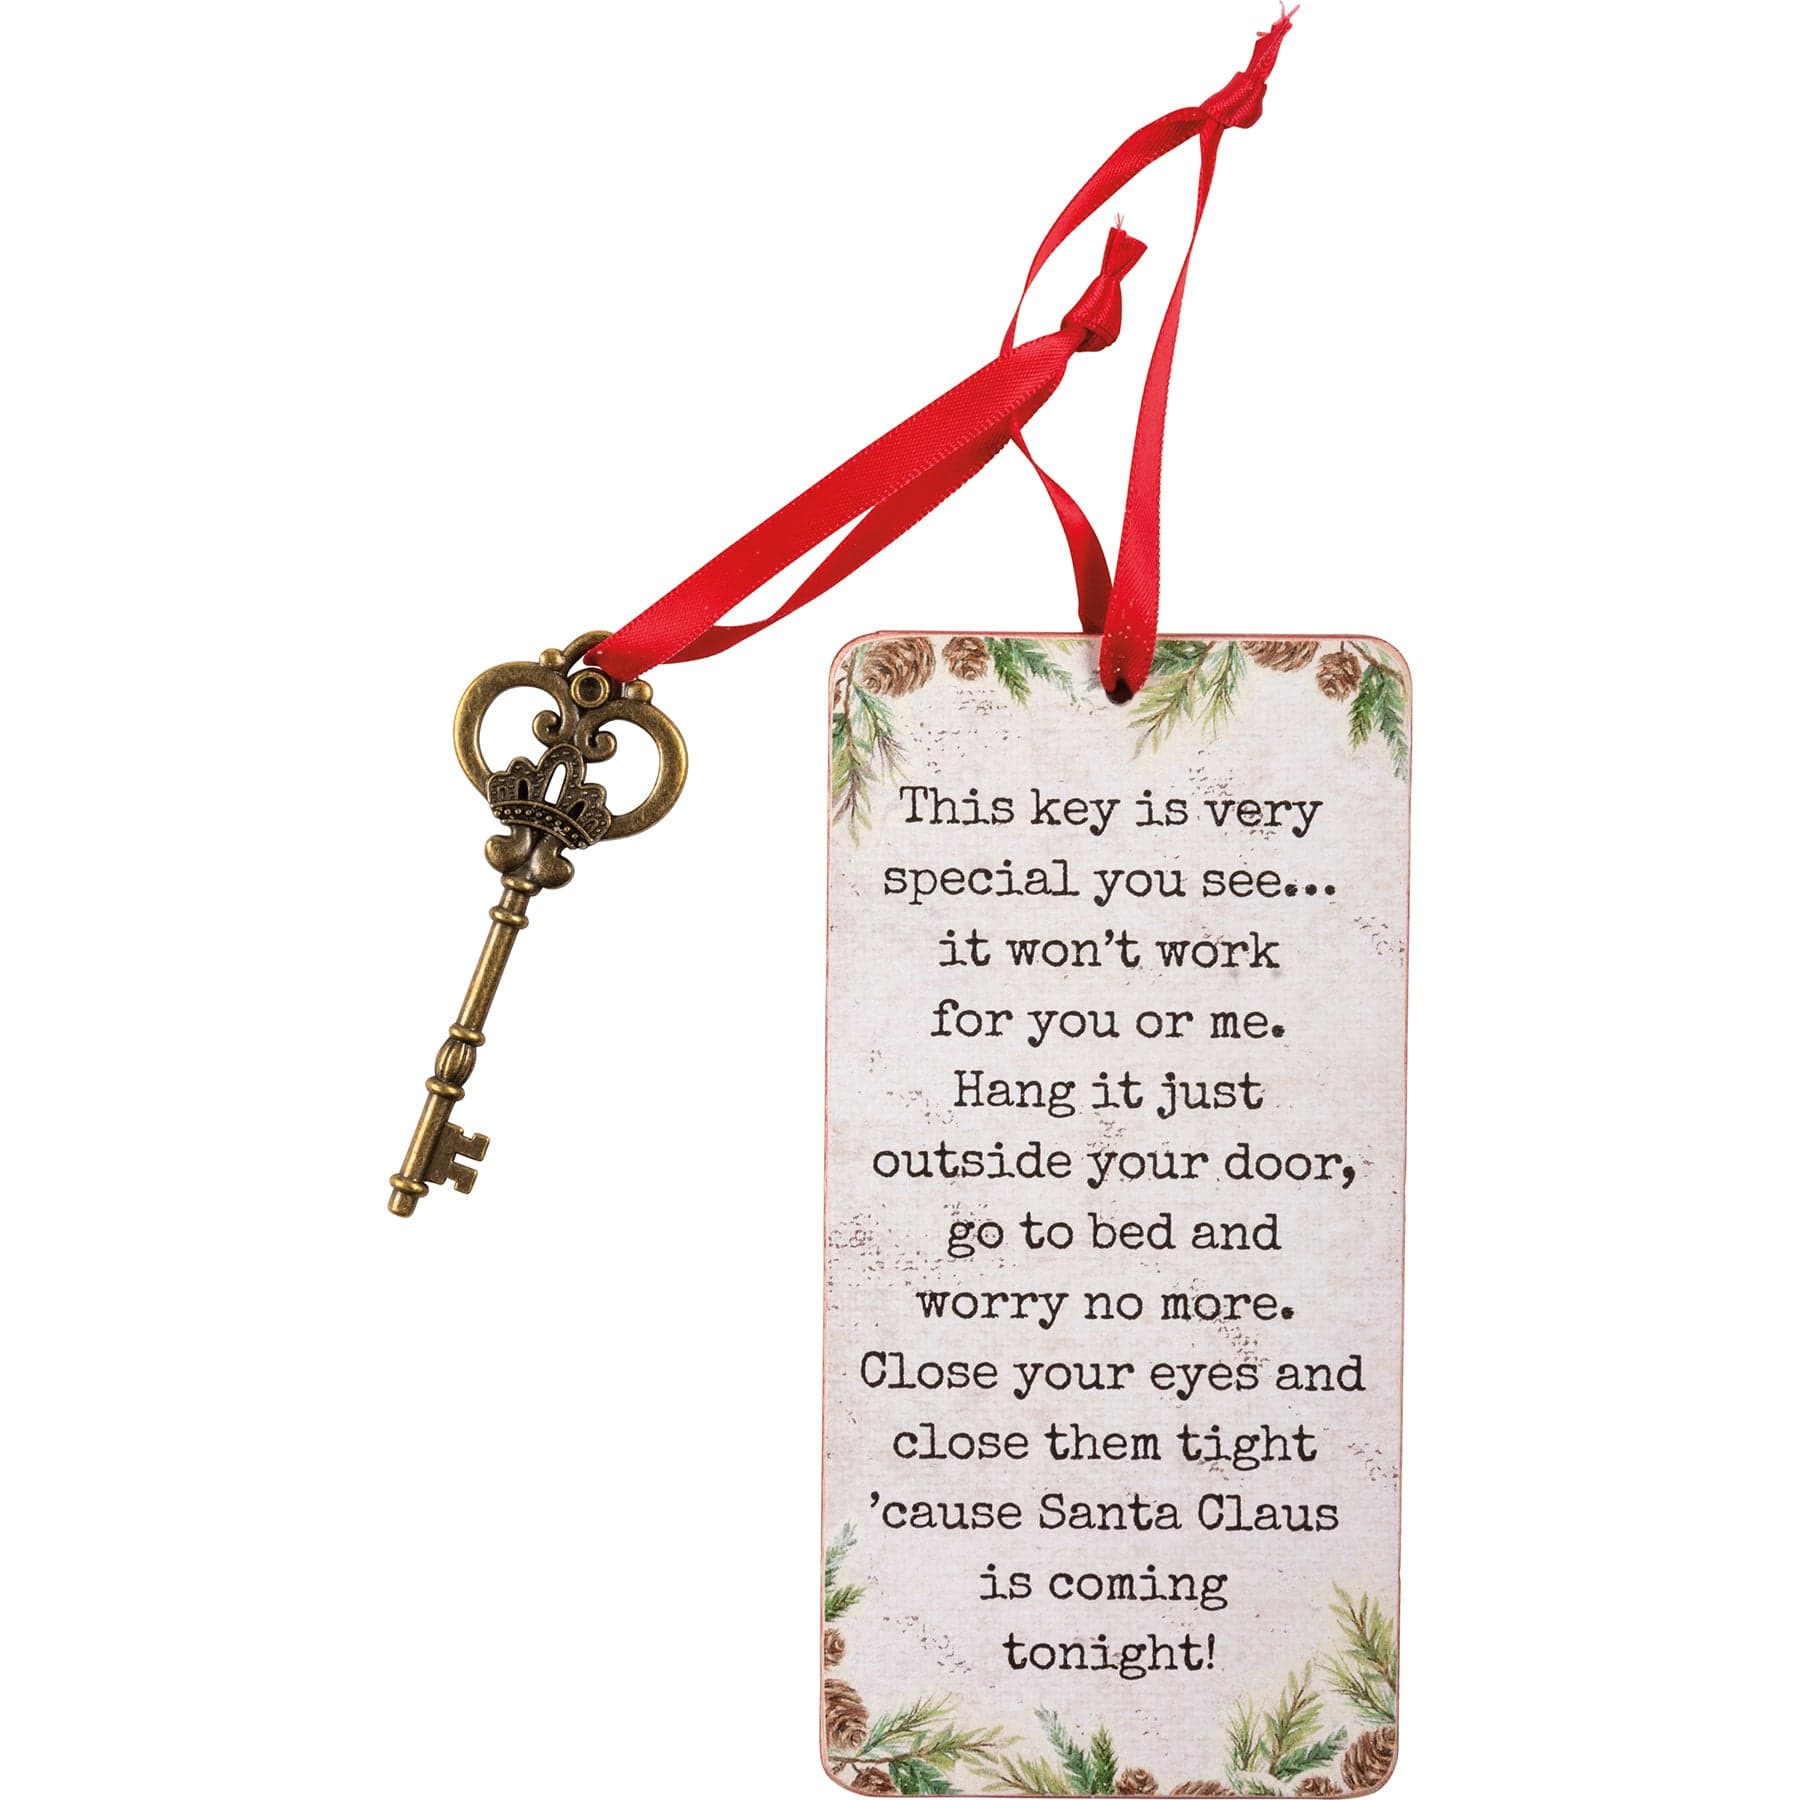 Ornament - Santa's Magic Key PBK-113542